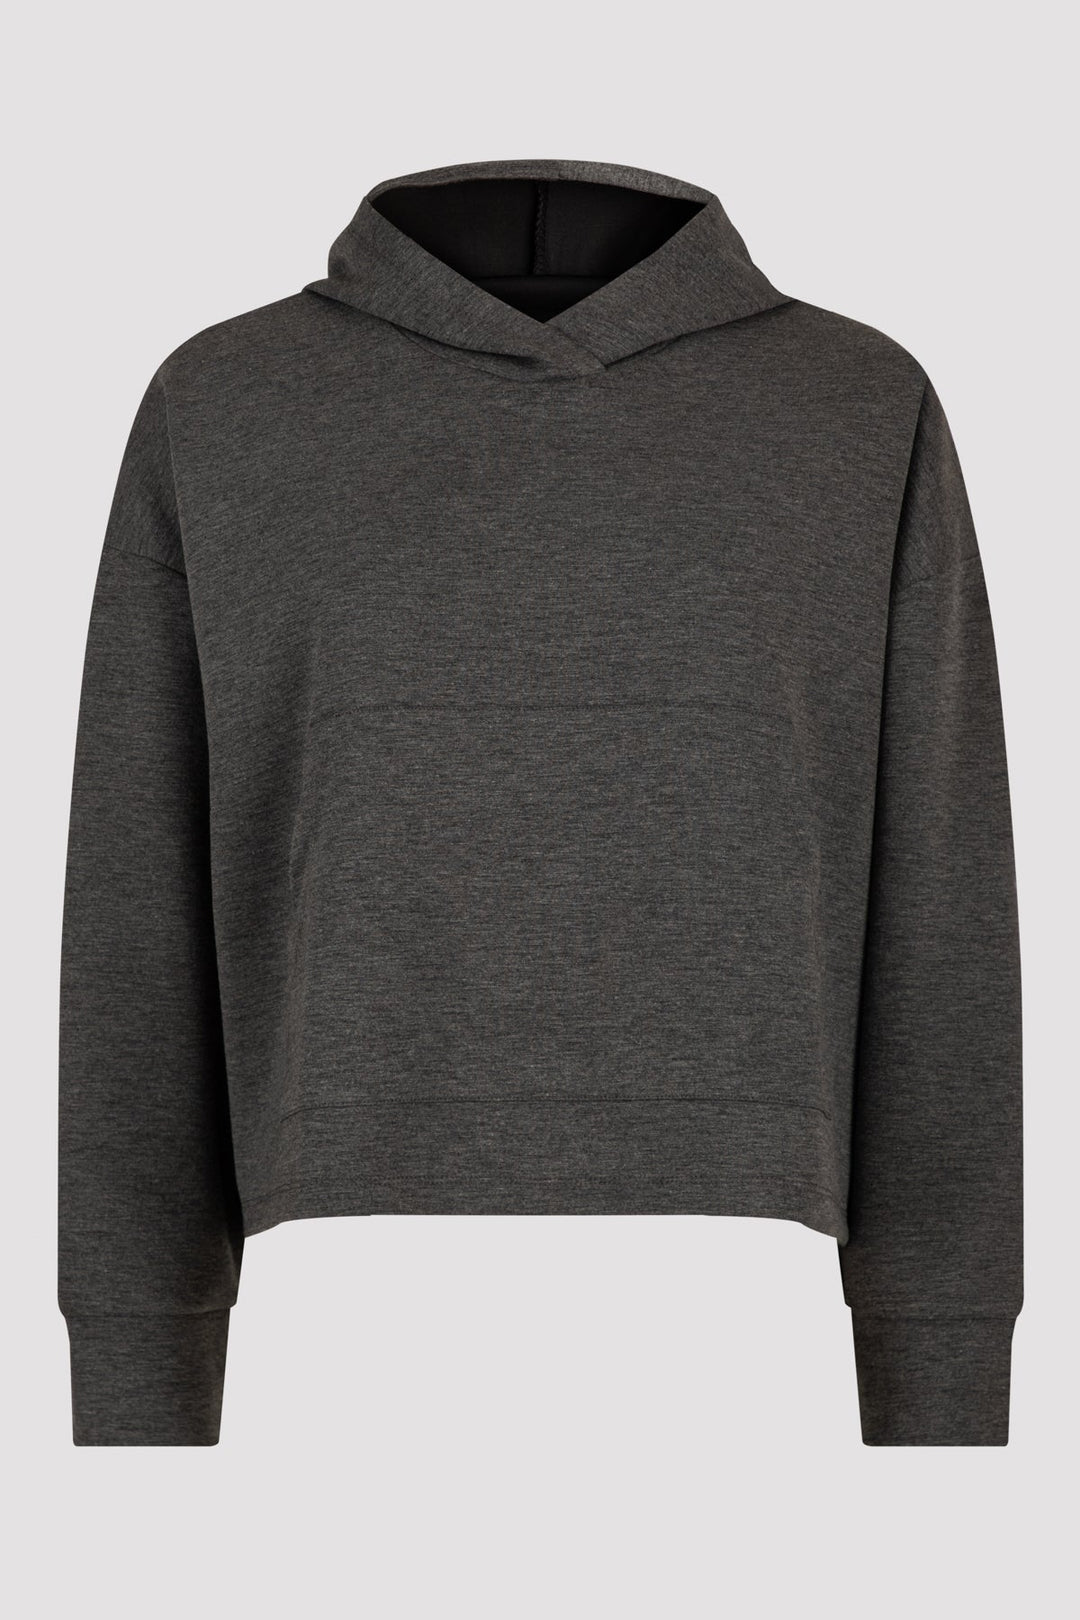 Dark Grey Melange Scuba Sweatshirt